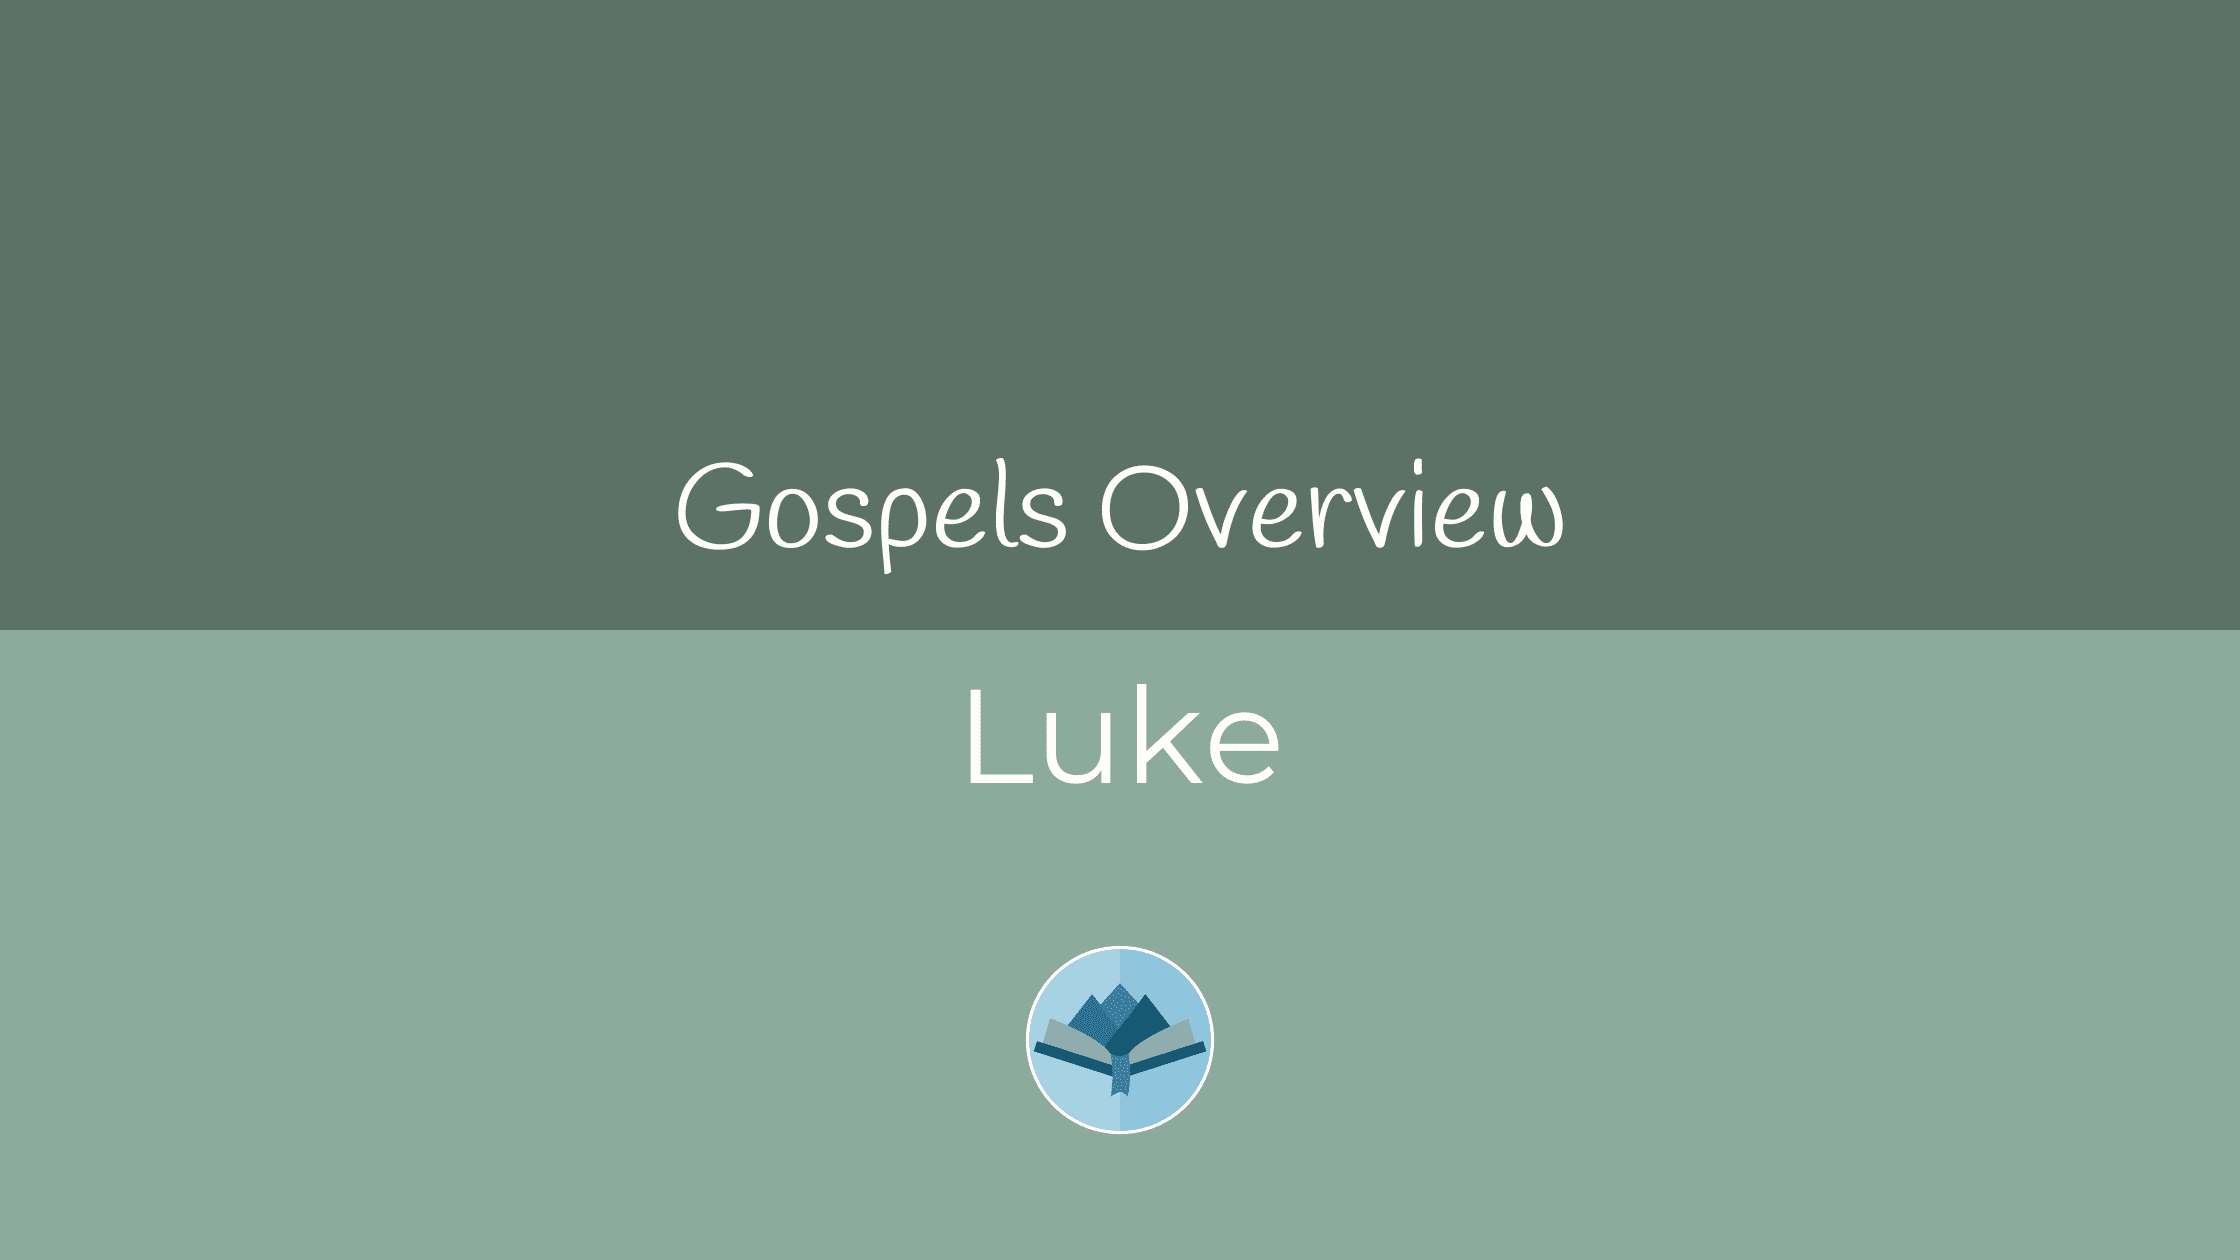 Luke Overview